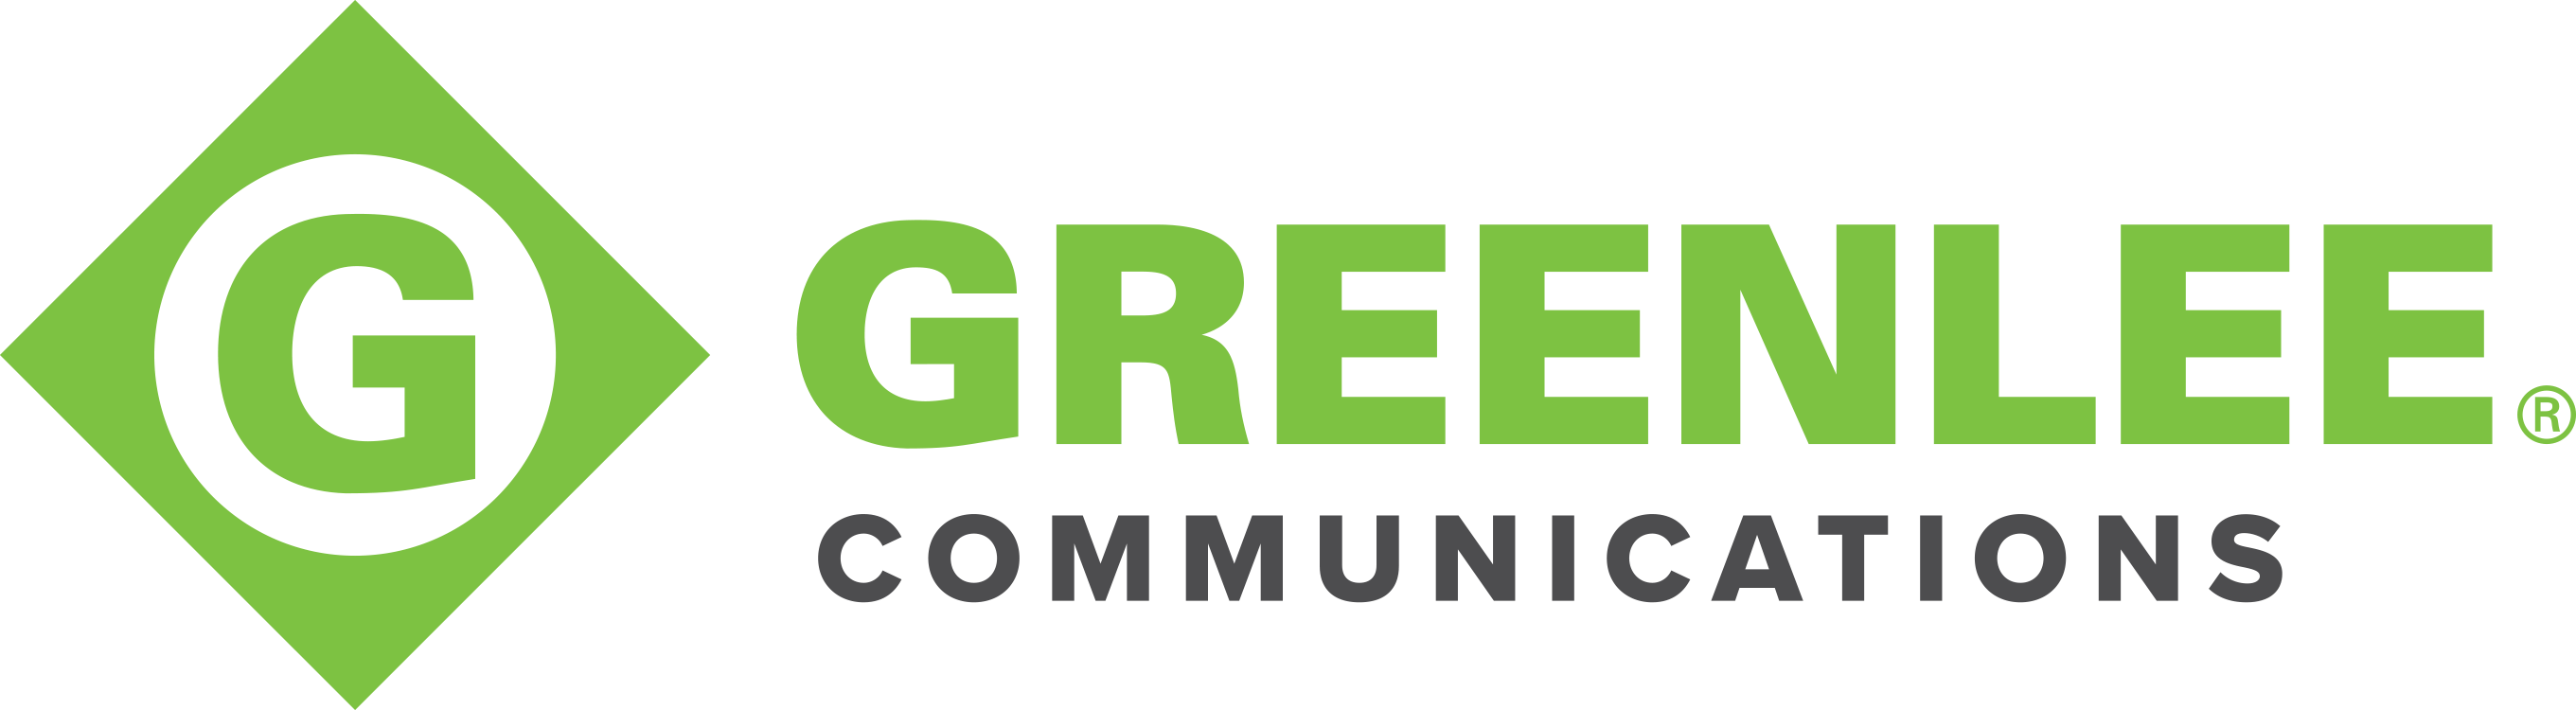 Greenlee Communications LOGO